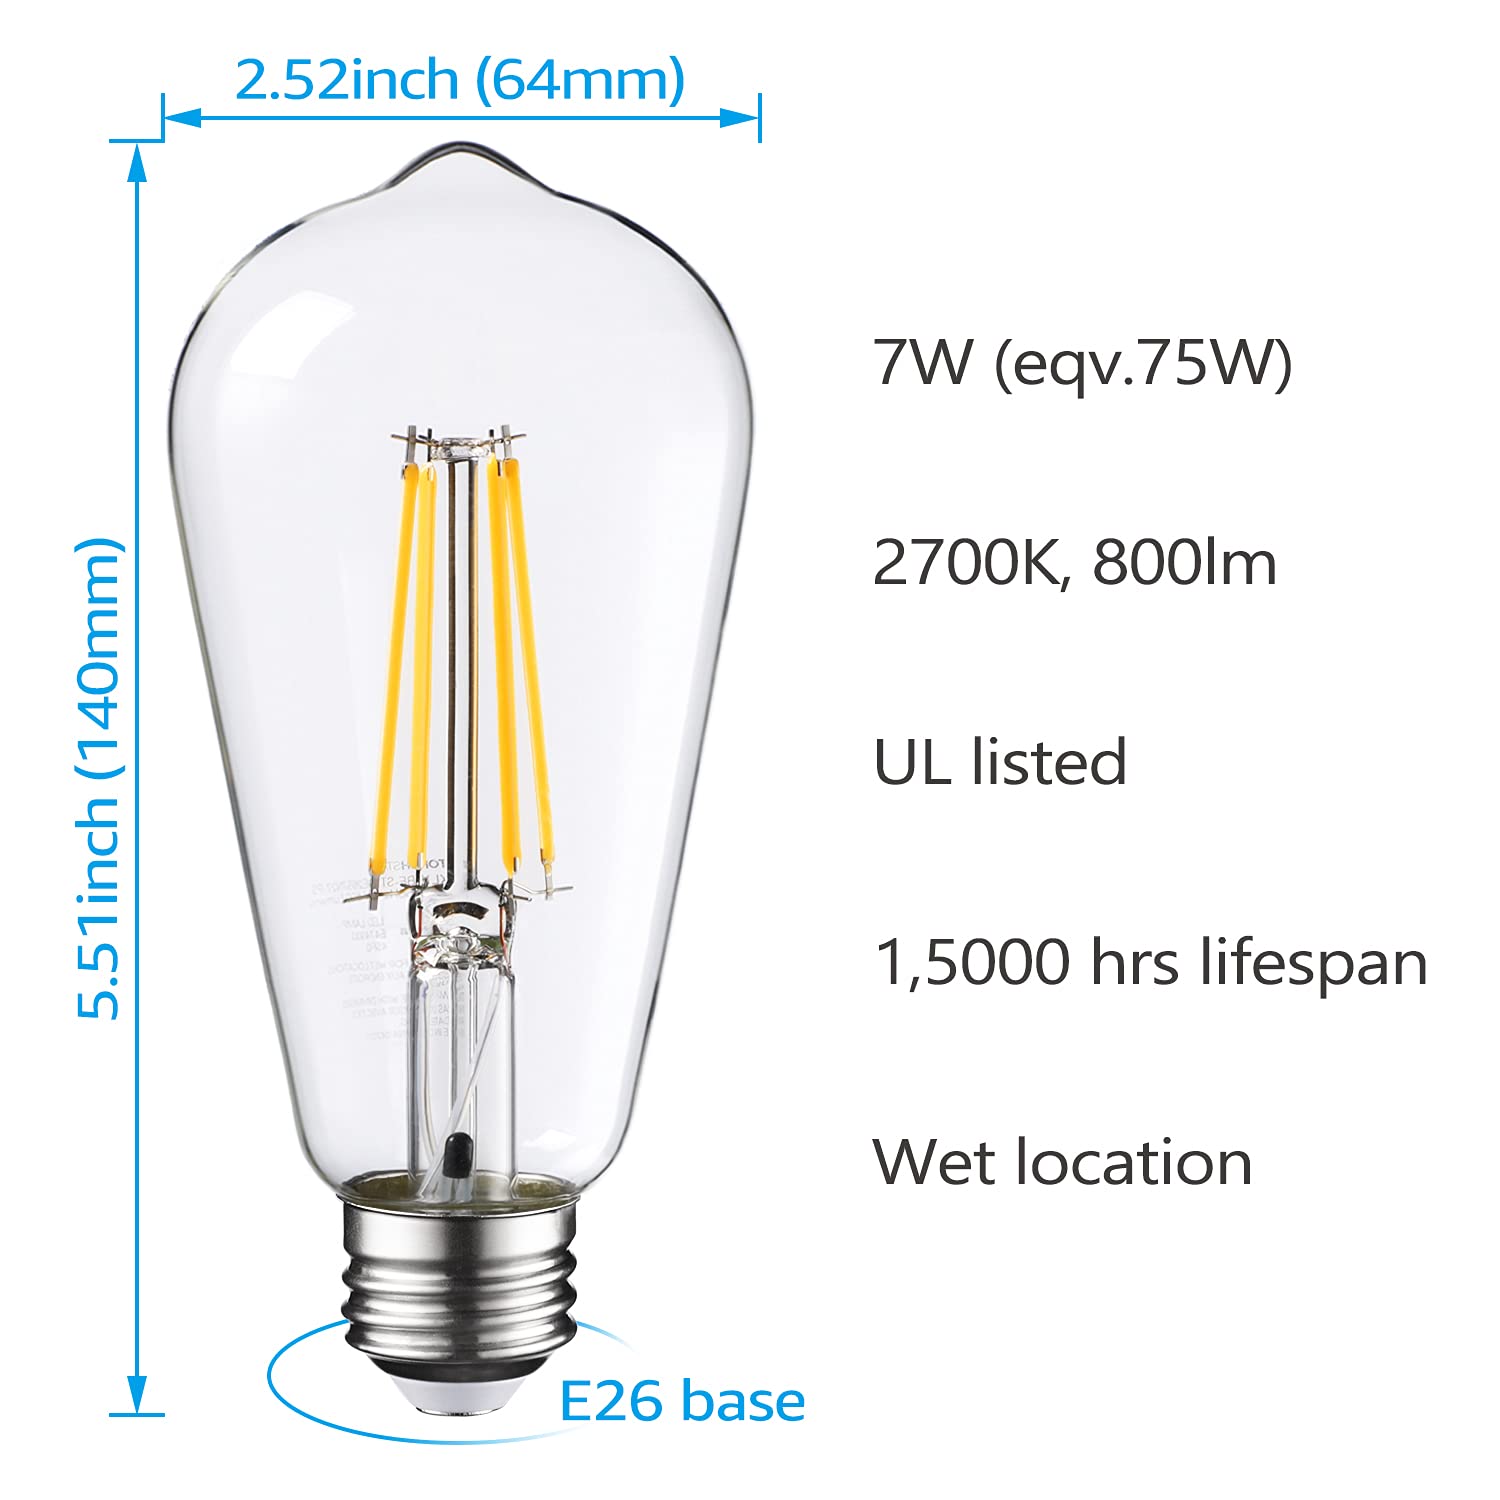 CrystalEra+ 7W ST64 LED Vintage Bulbs w/ Photocell - 2700K Soft White